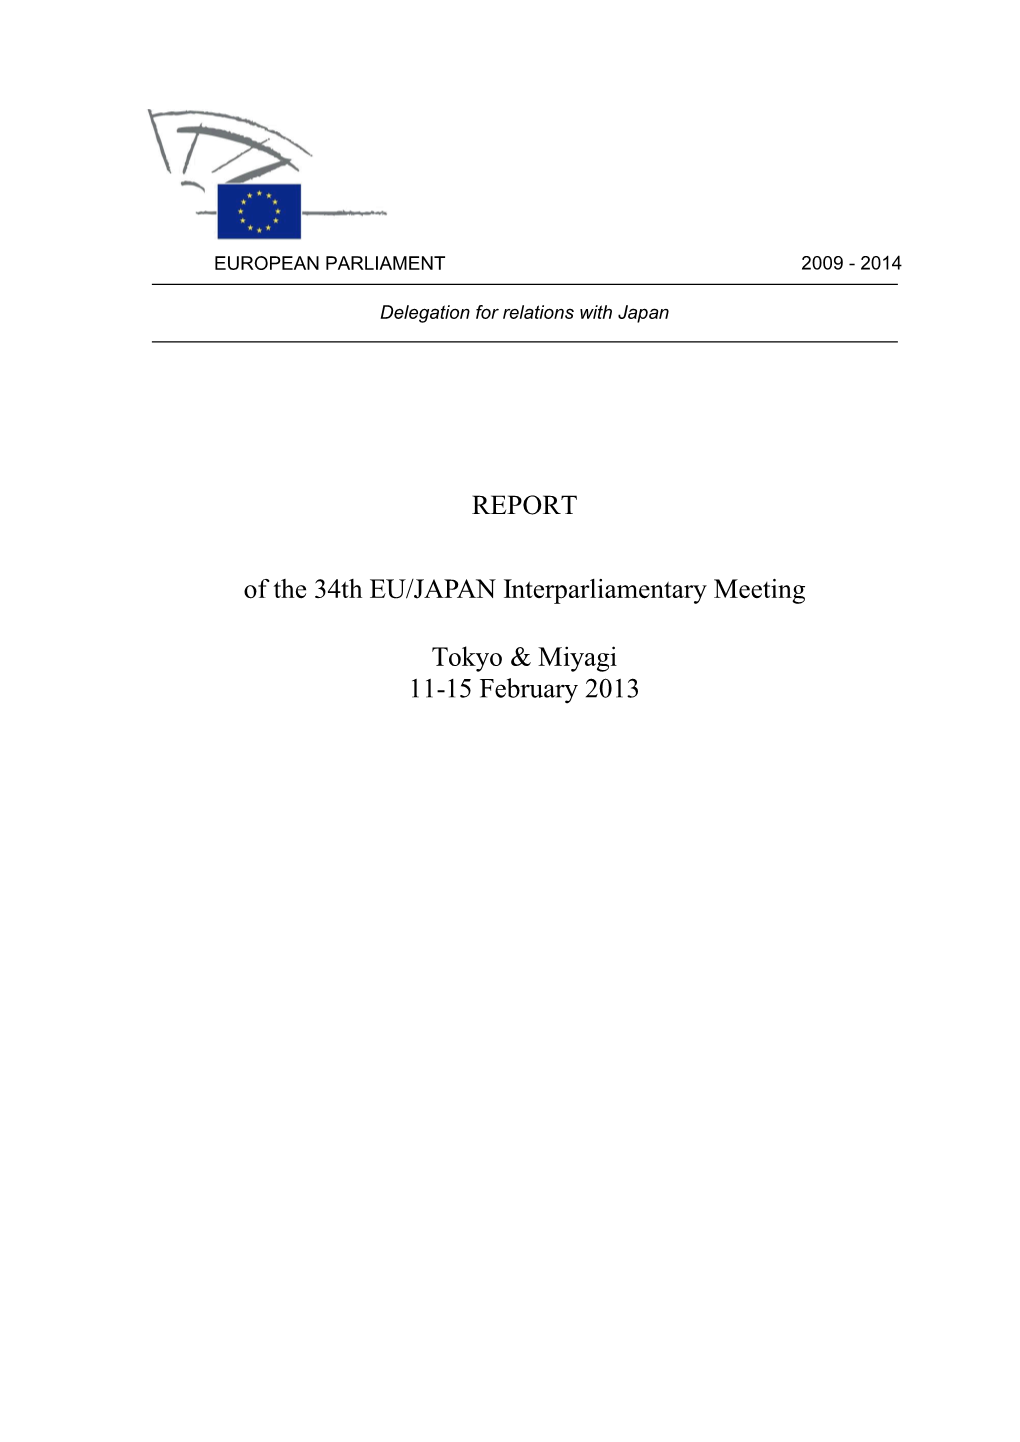 REPORT of the 34Th EU/JAPAN Interparliamentary Meeting Tokyo